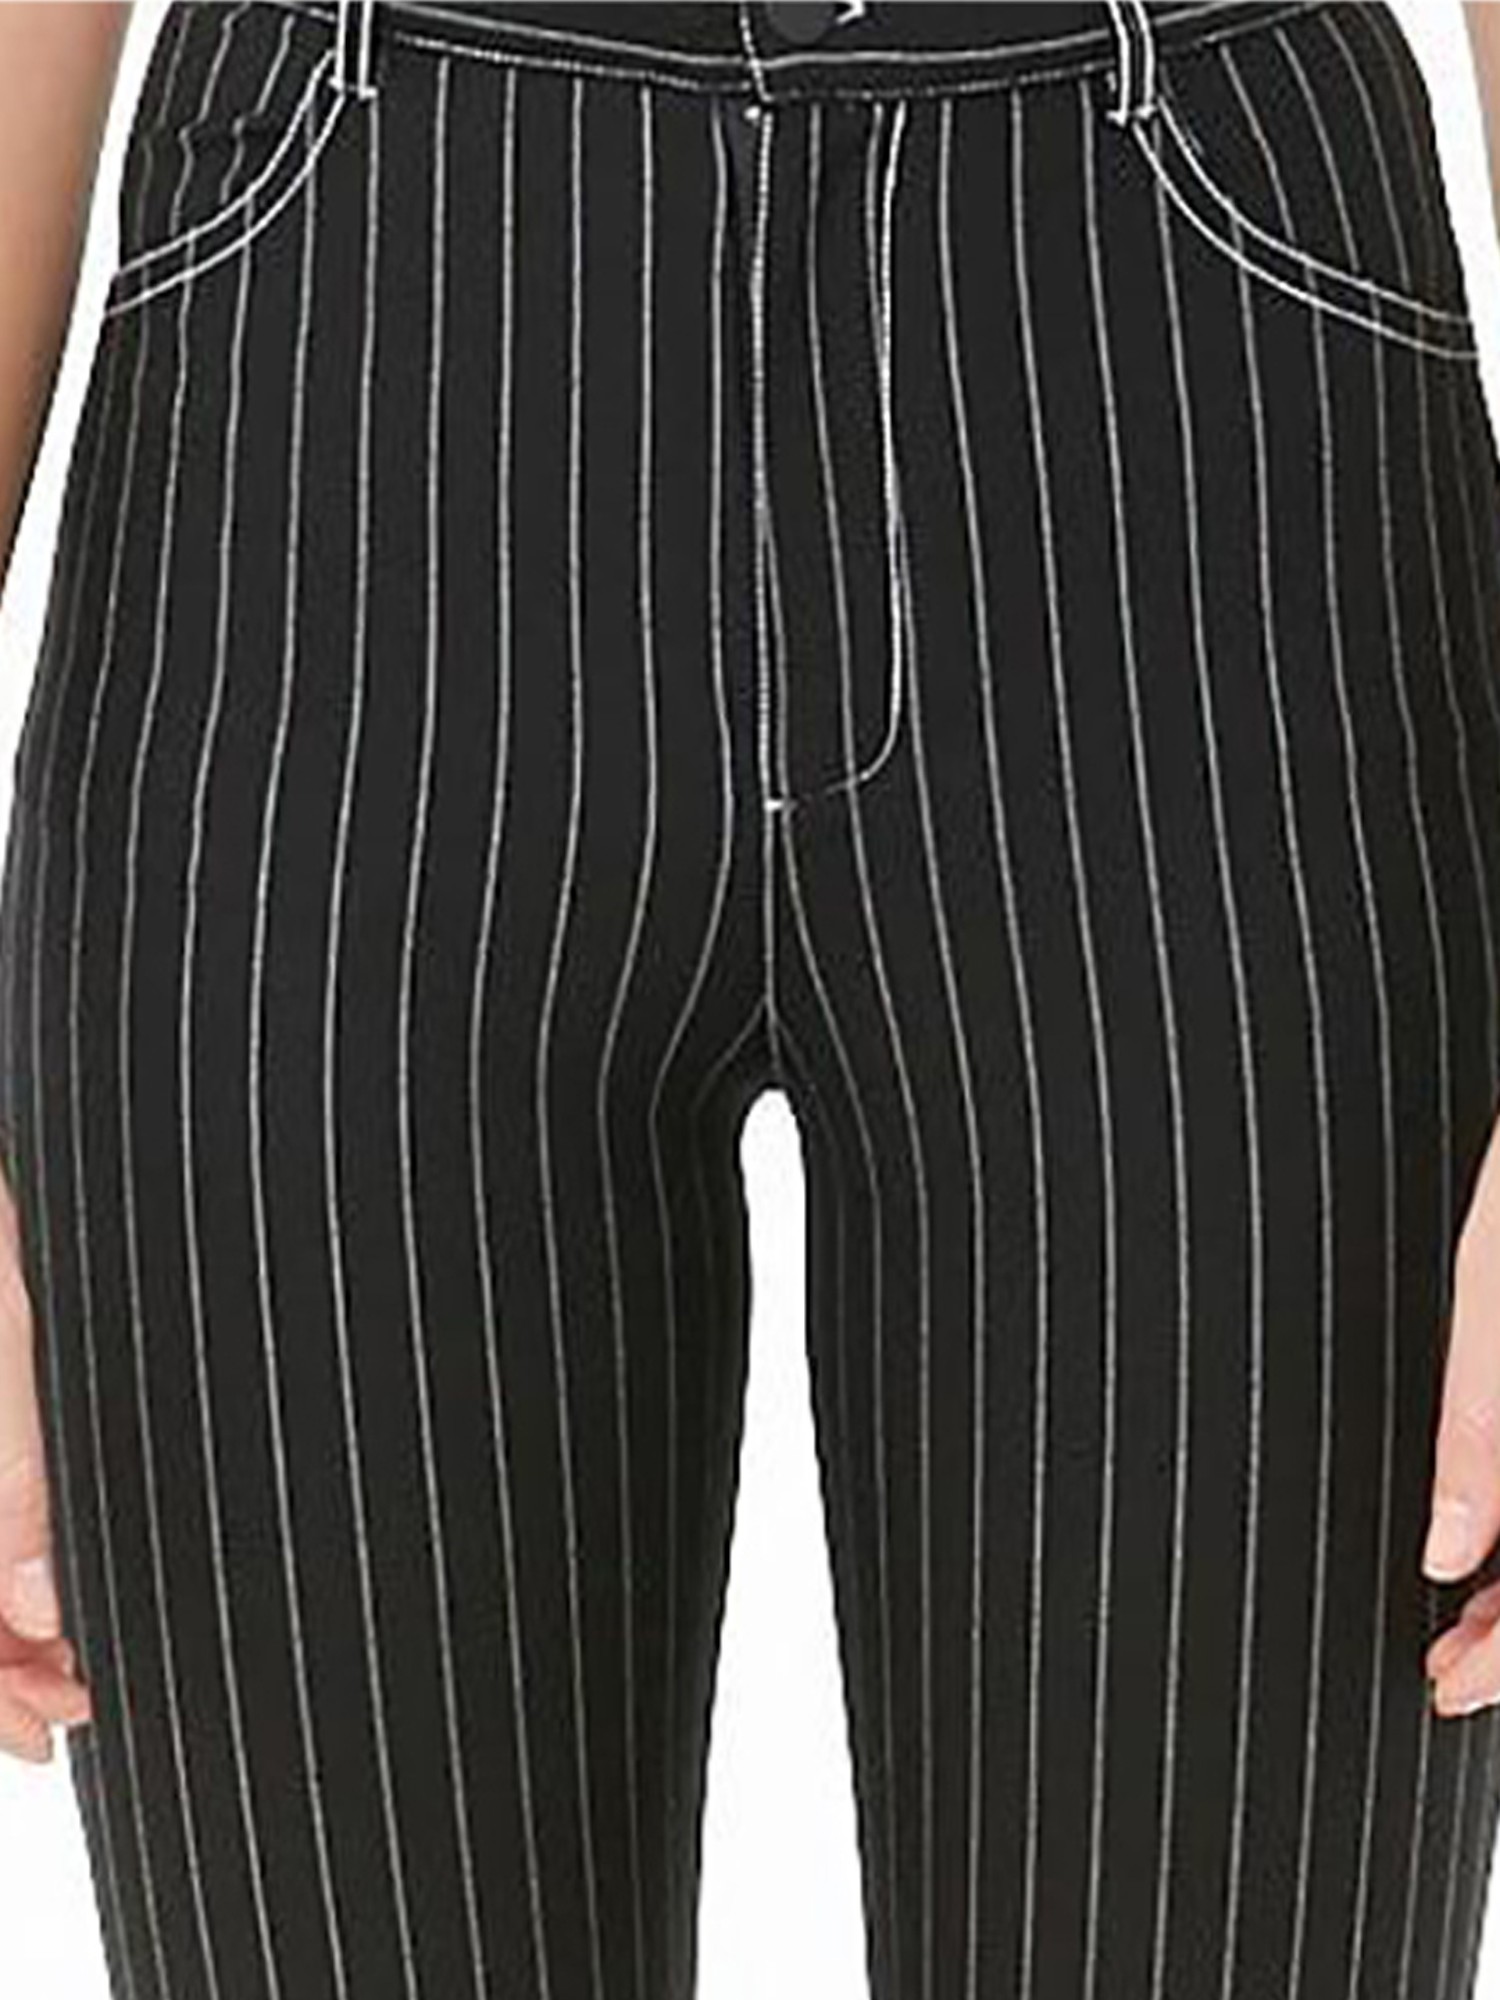 Black Pistol Freak pants black / white stripes